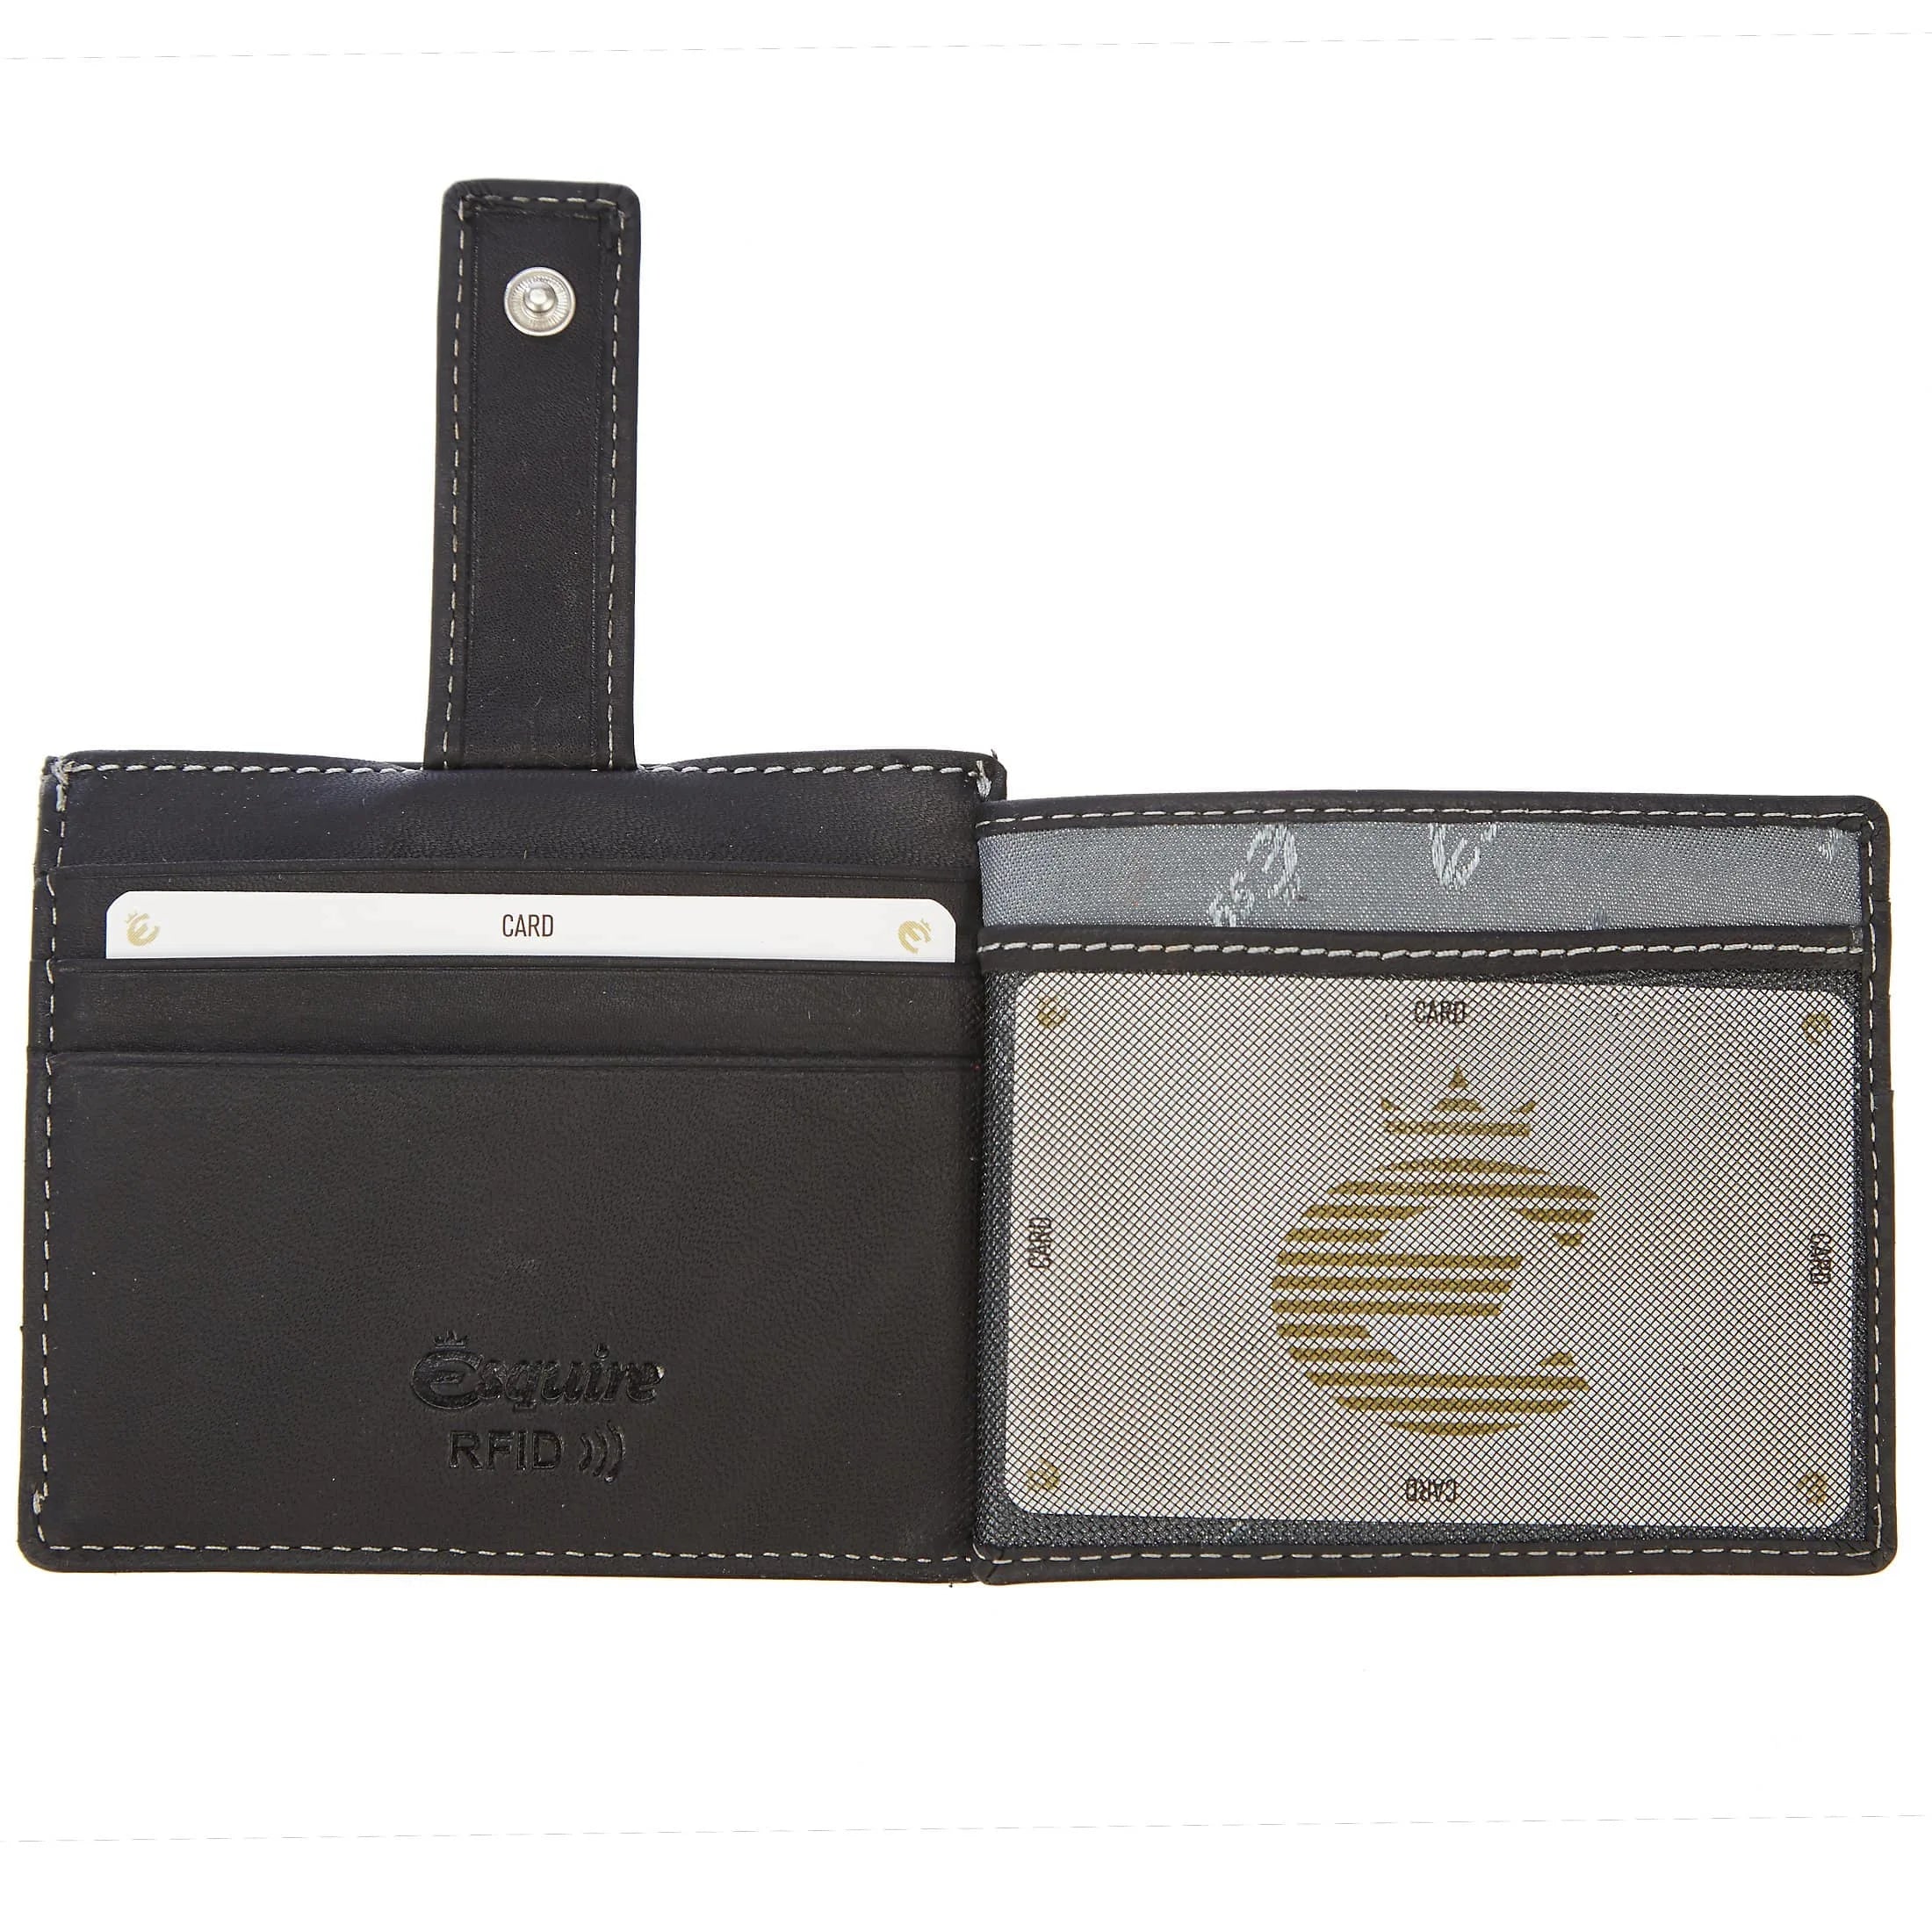 Esquire Oslo Dallas Kreditkartenetui RFID 10 cm - schwarz